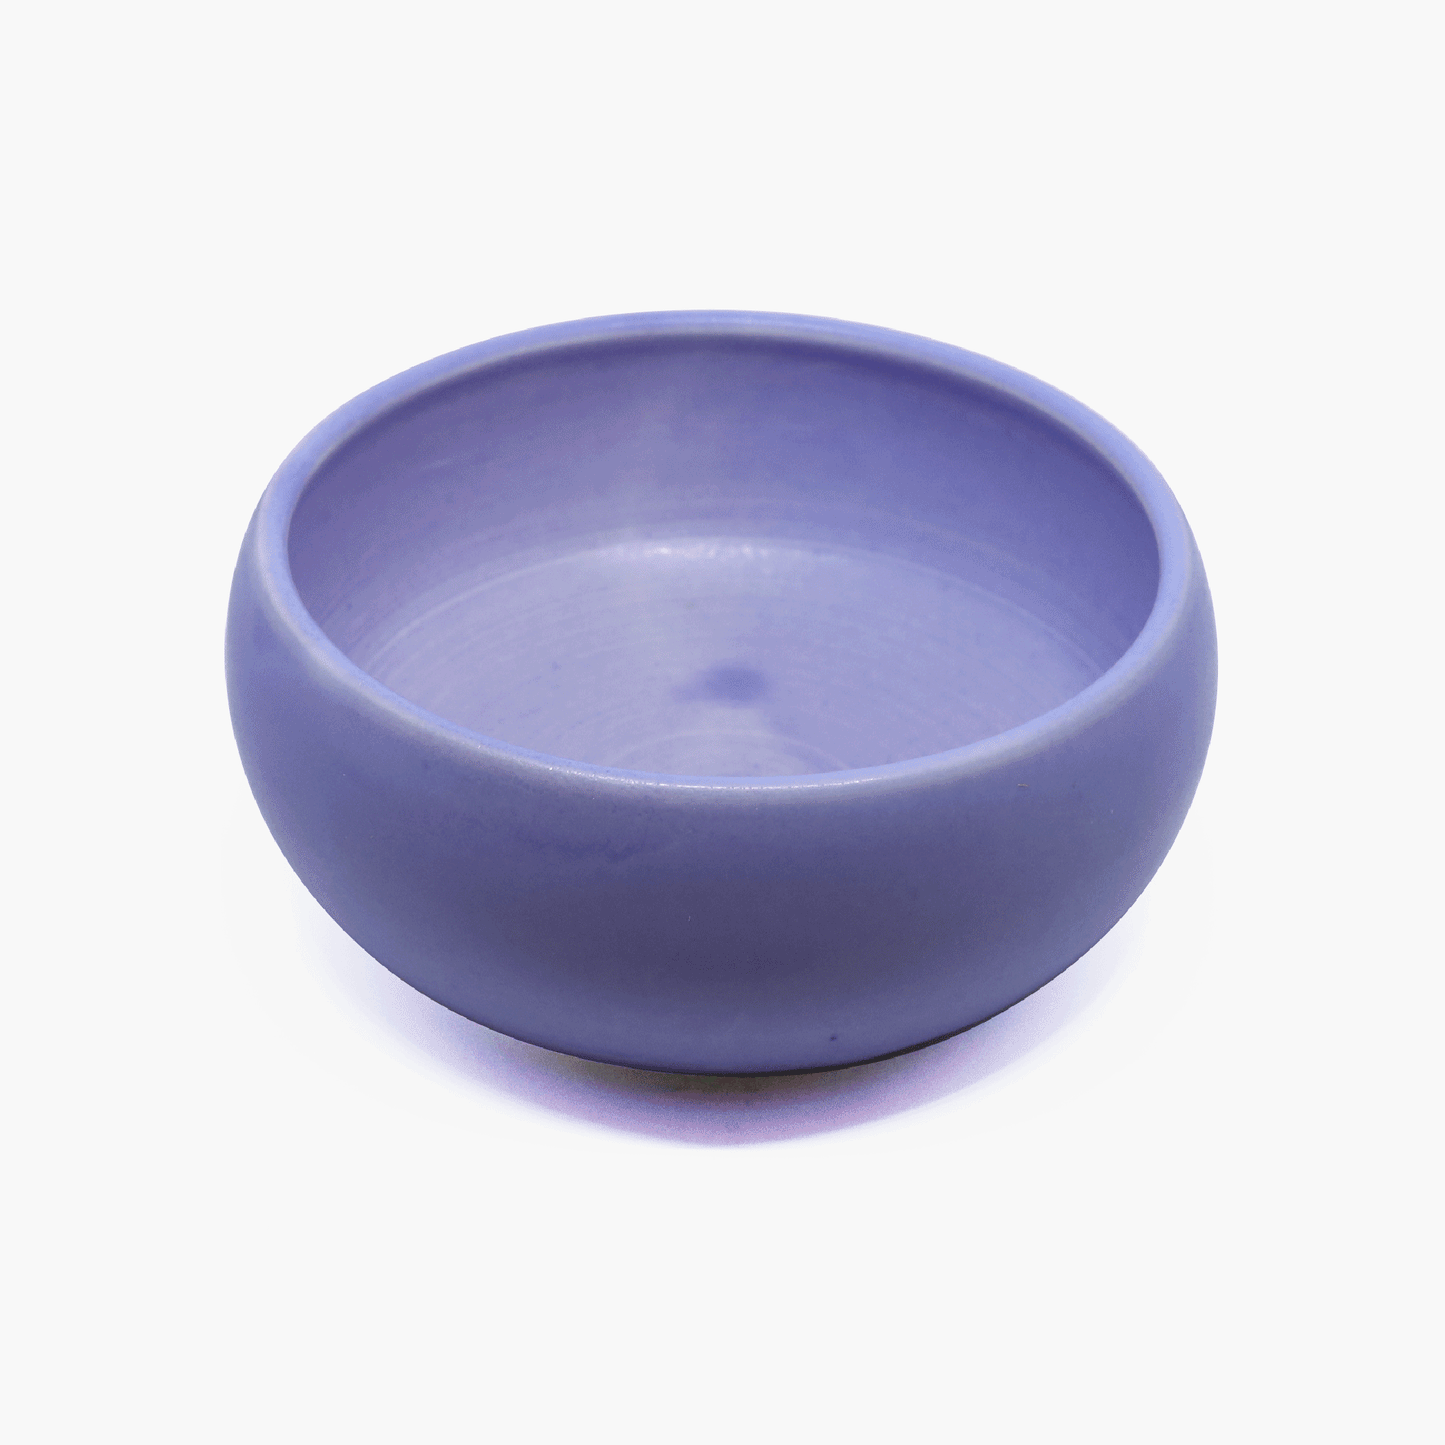 Bubble Dip Bowl in Periwinkle Semi-Porcelain